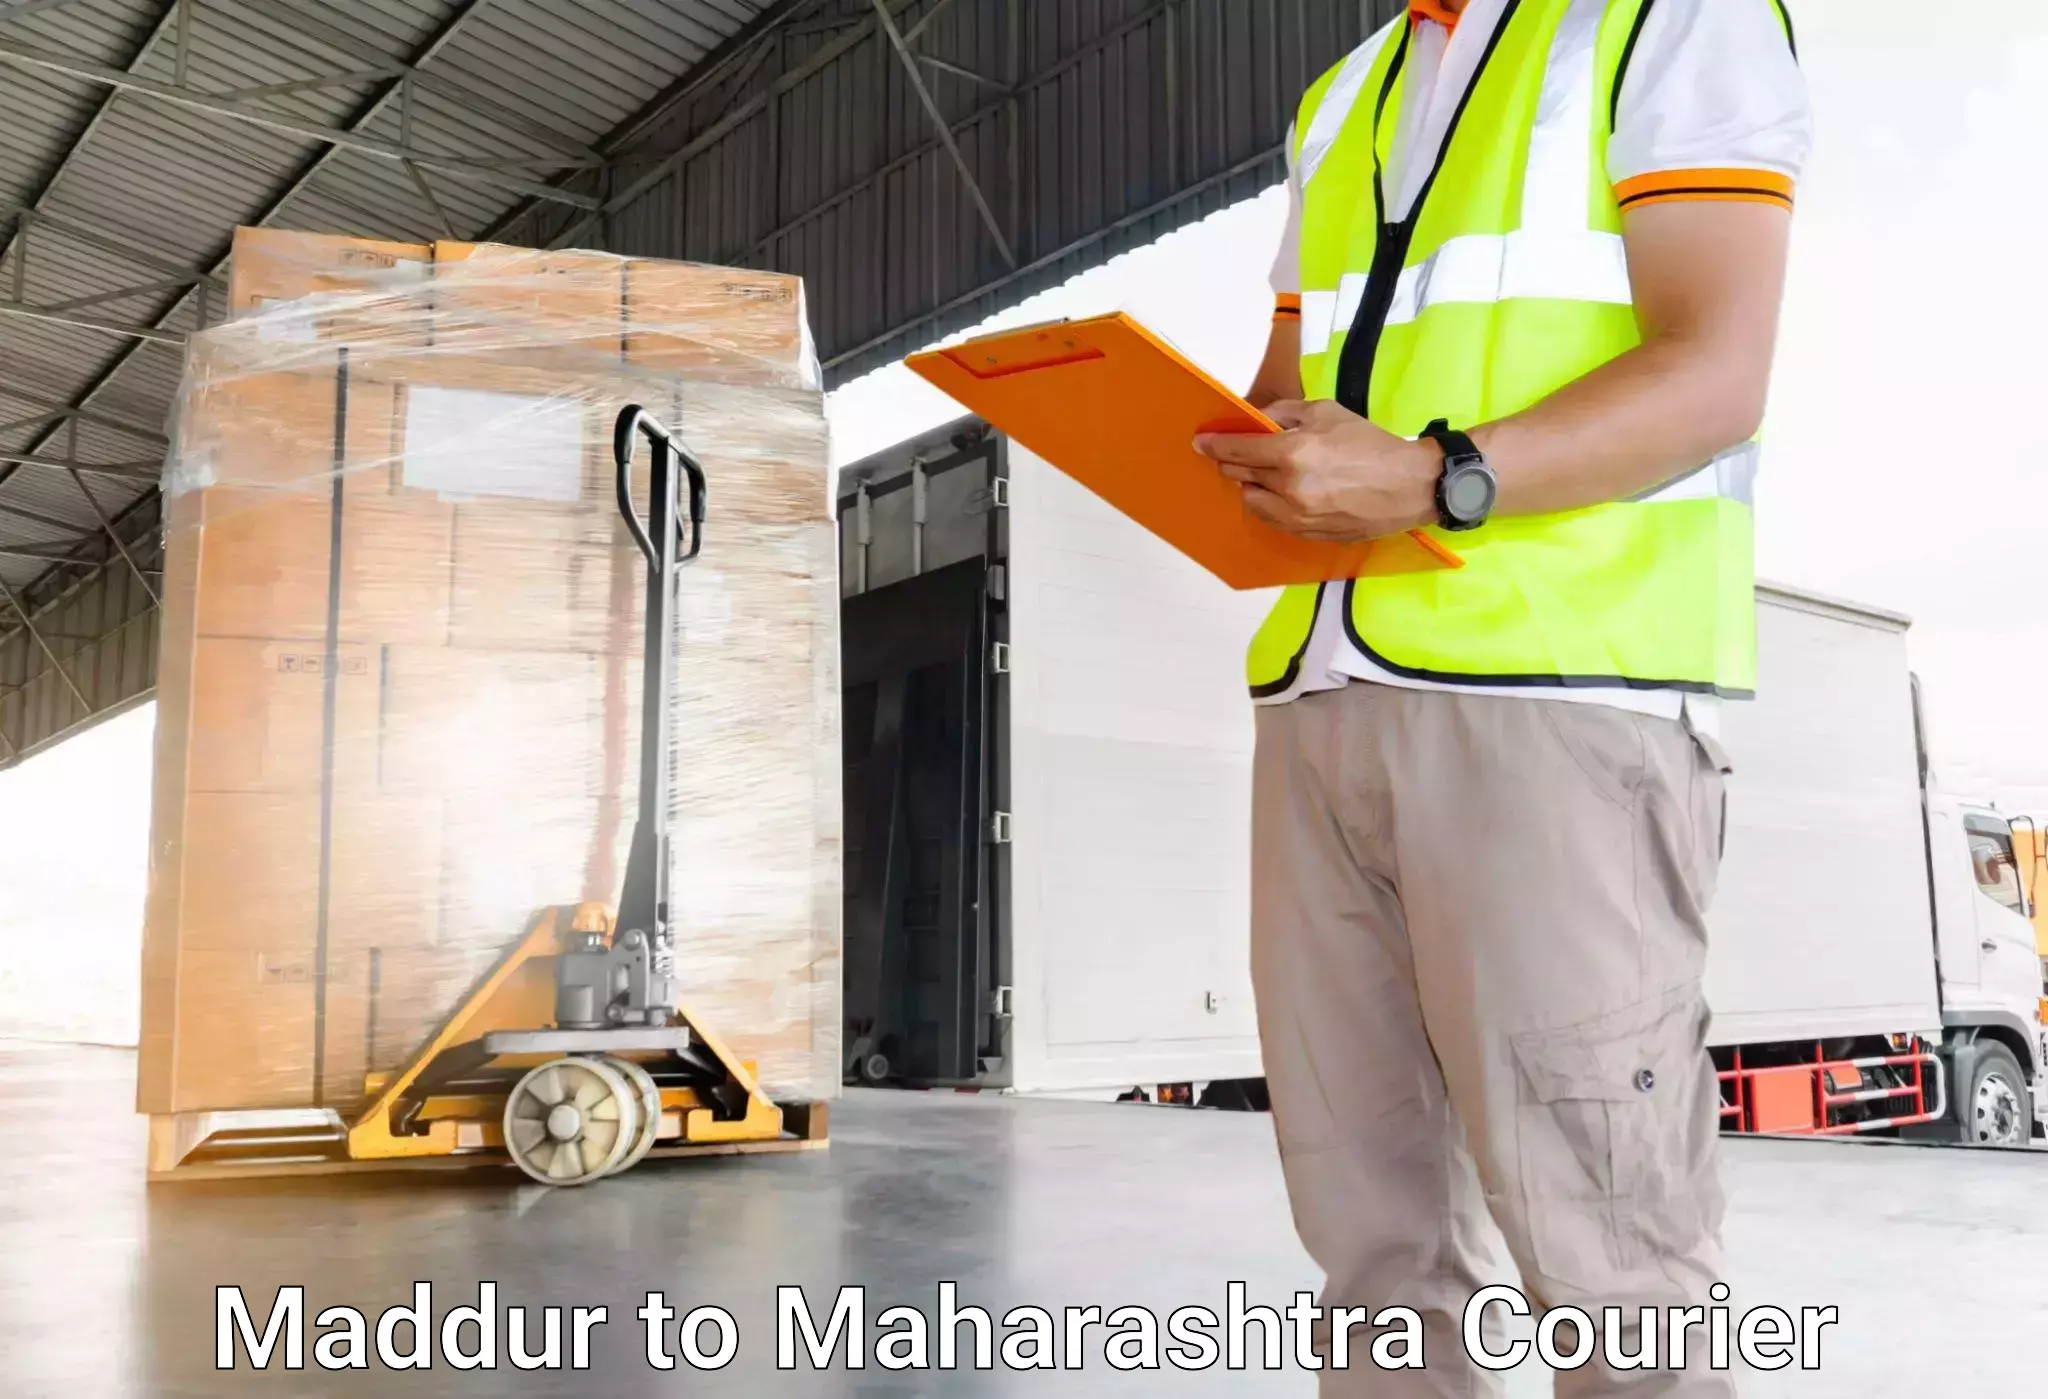 Luggage transfer service Maddur to Maharashtra